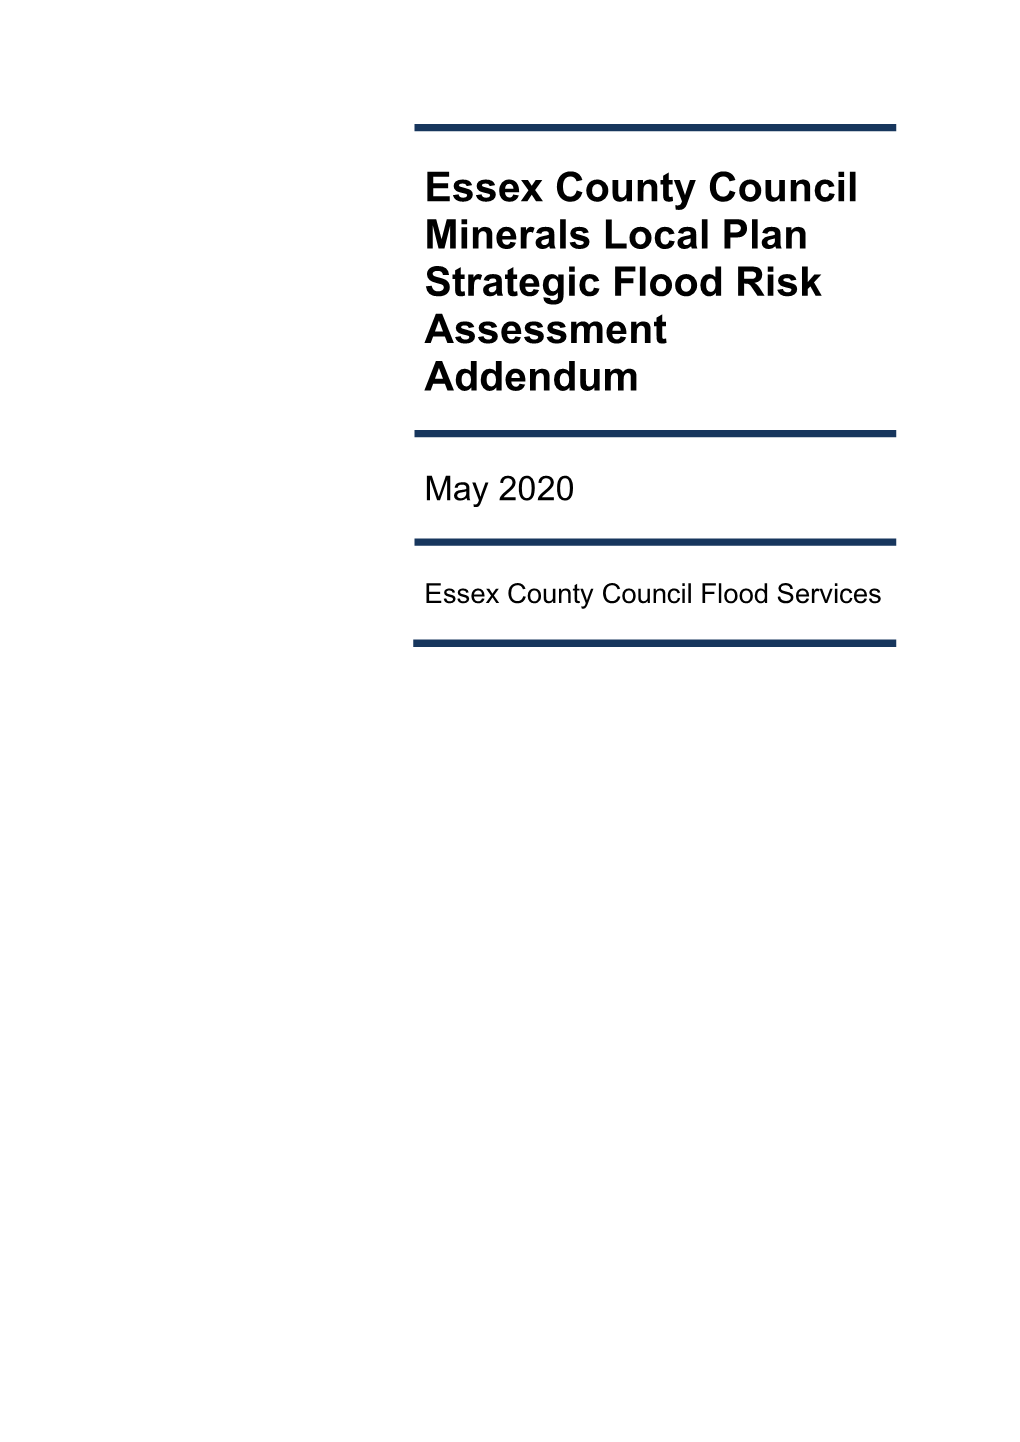 Essex County Council Minerals Local Plan Strategic Flood Risk Assessment Addendum